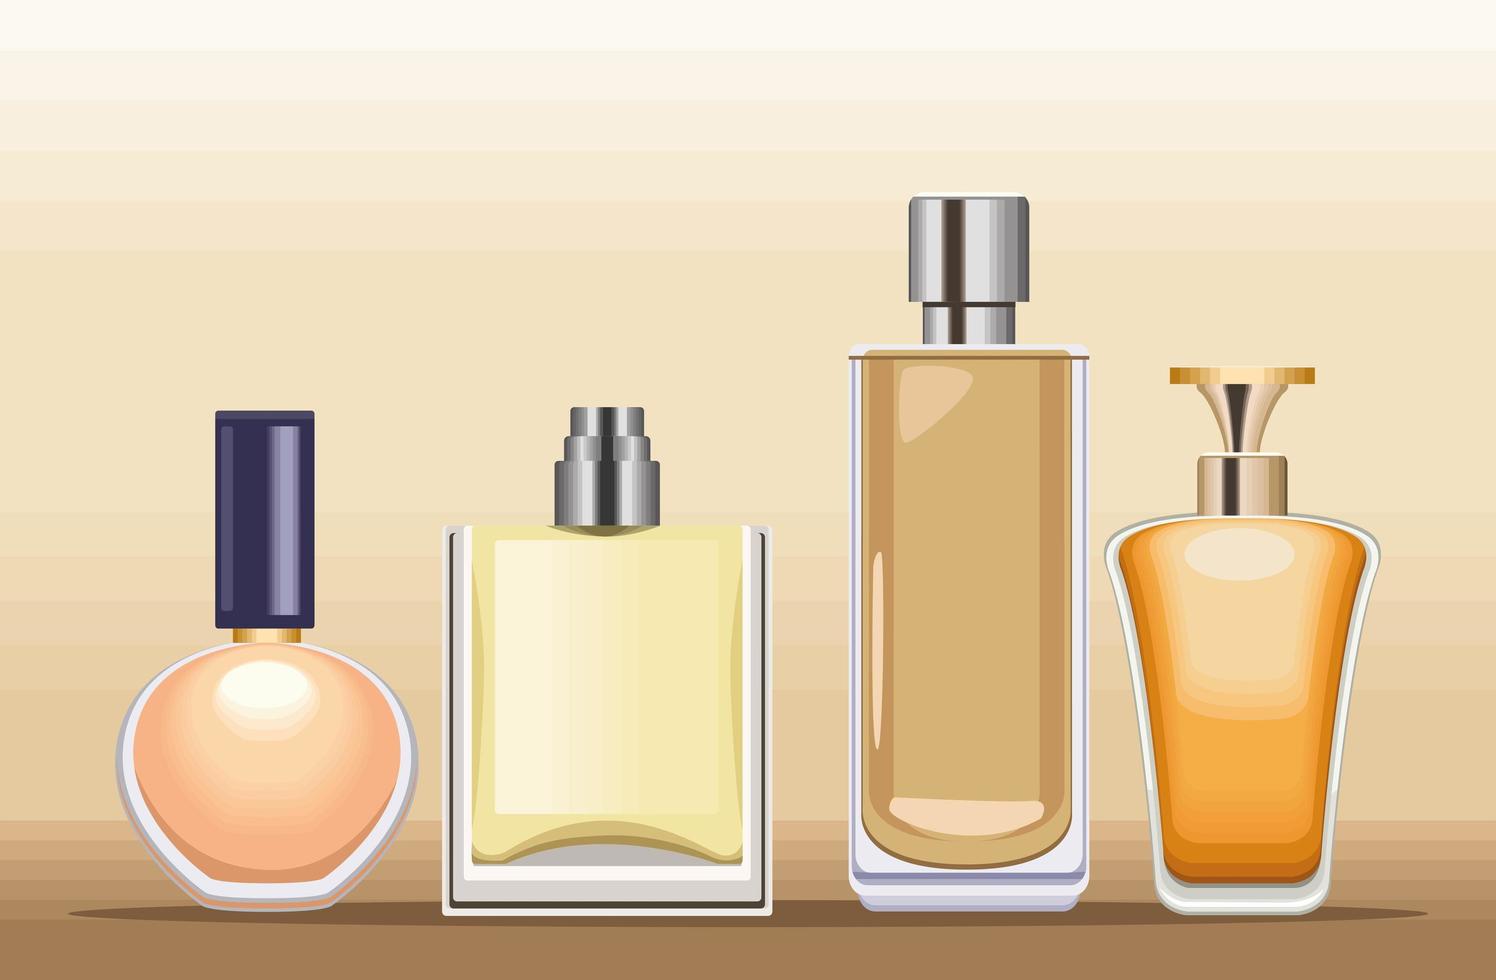 four perfumes bottles vector